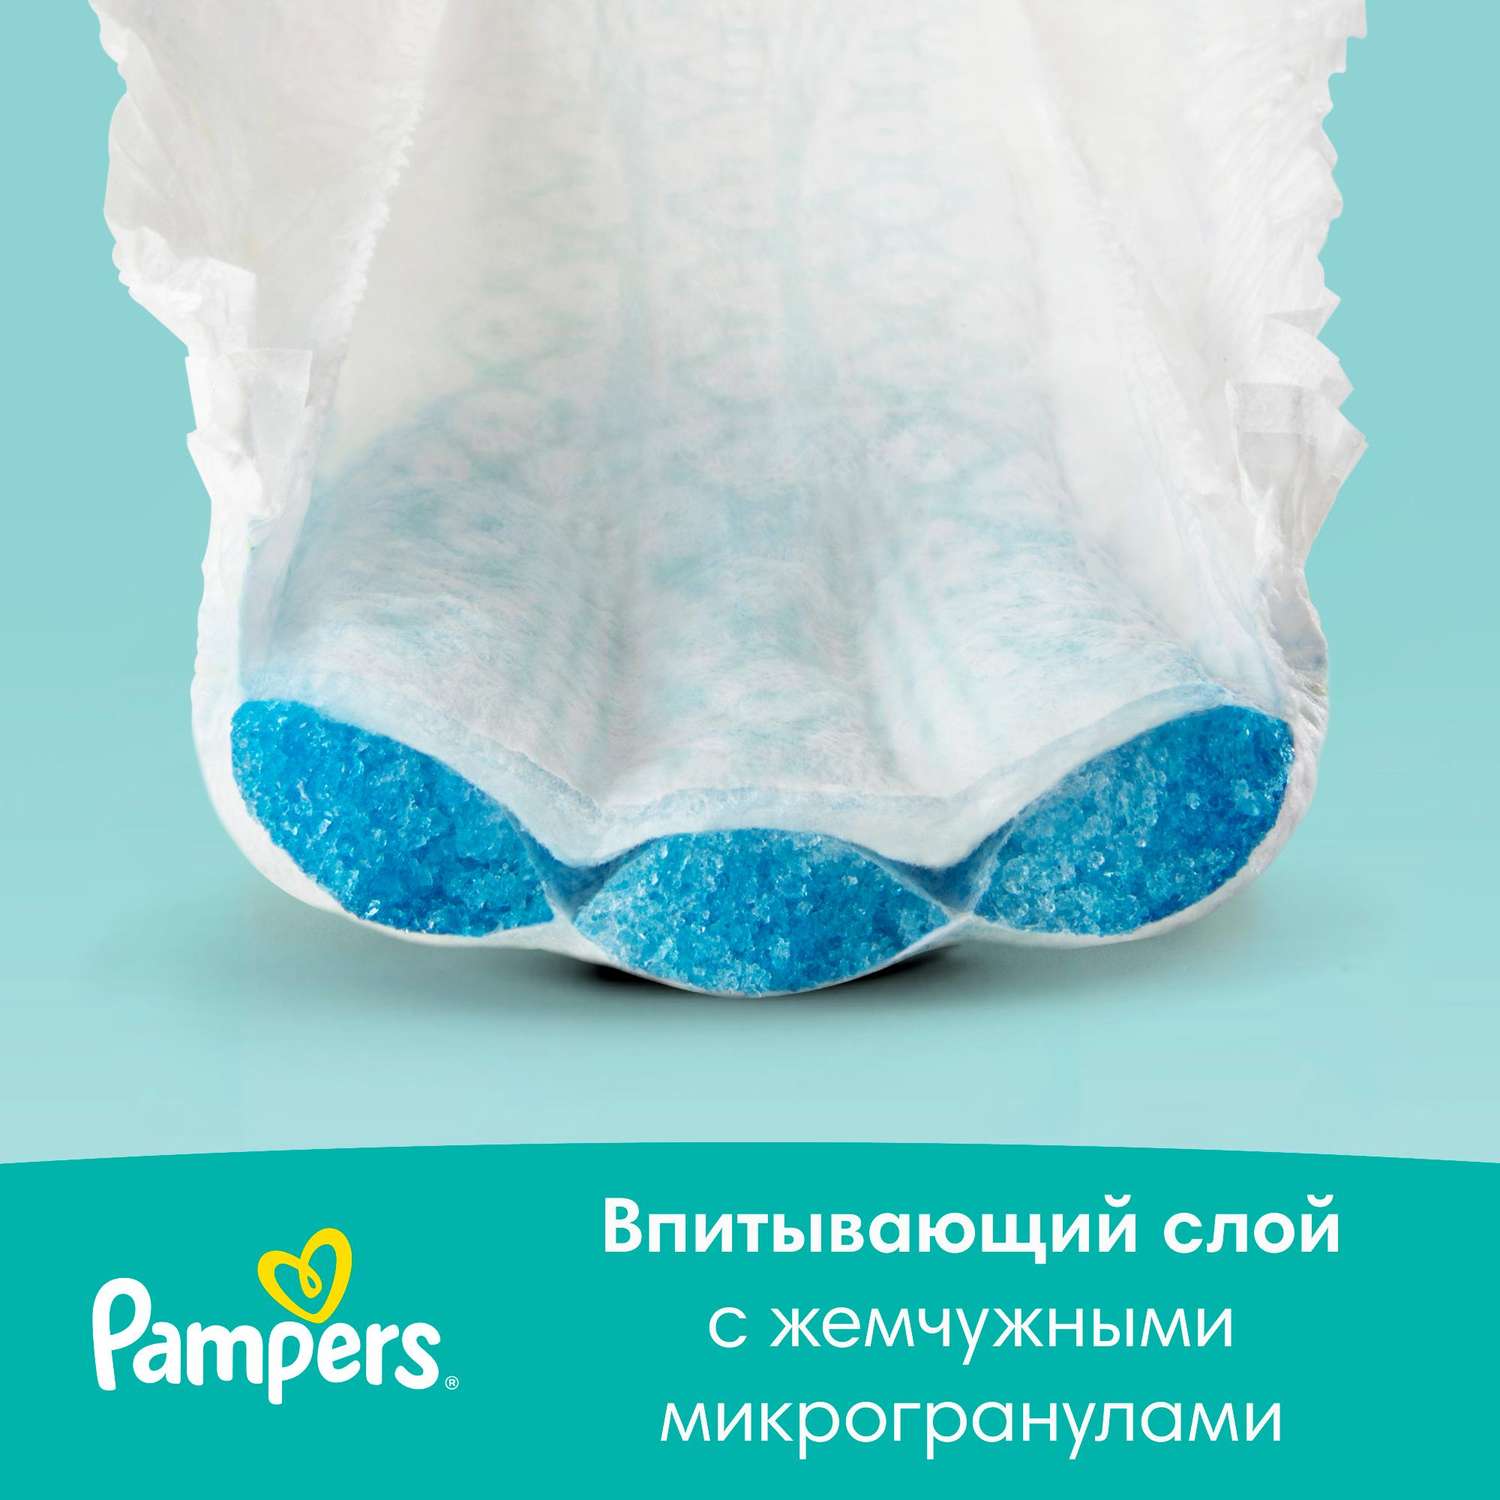 Подгузники Pampers New Baby-Dry 1 2-5кг 27шт - фото 3